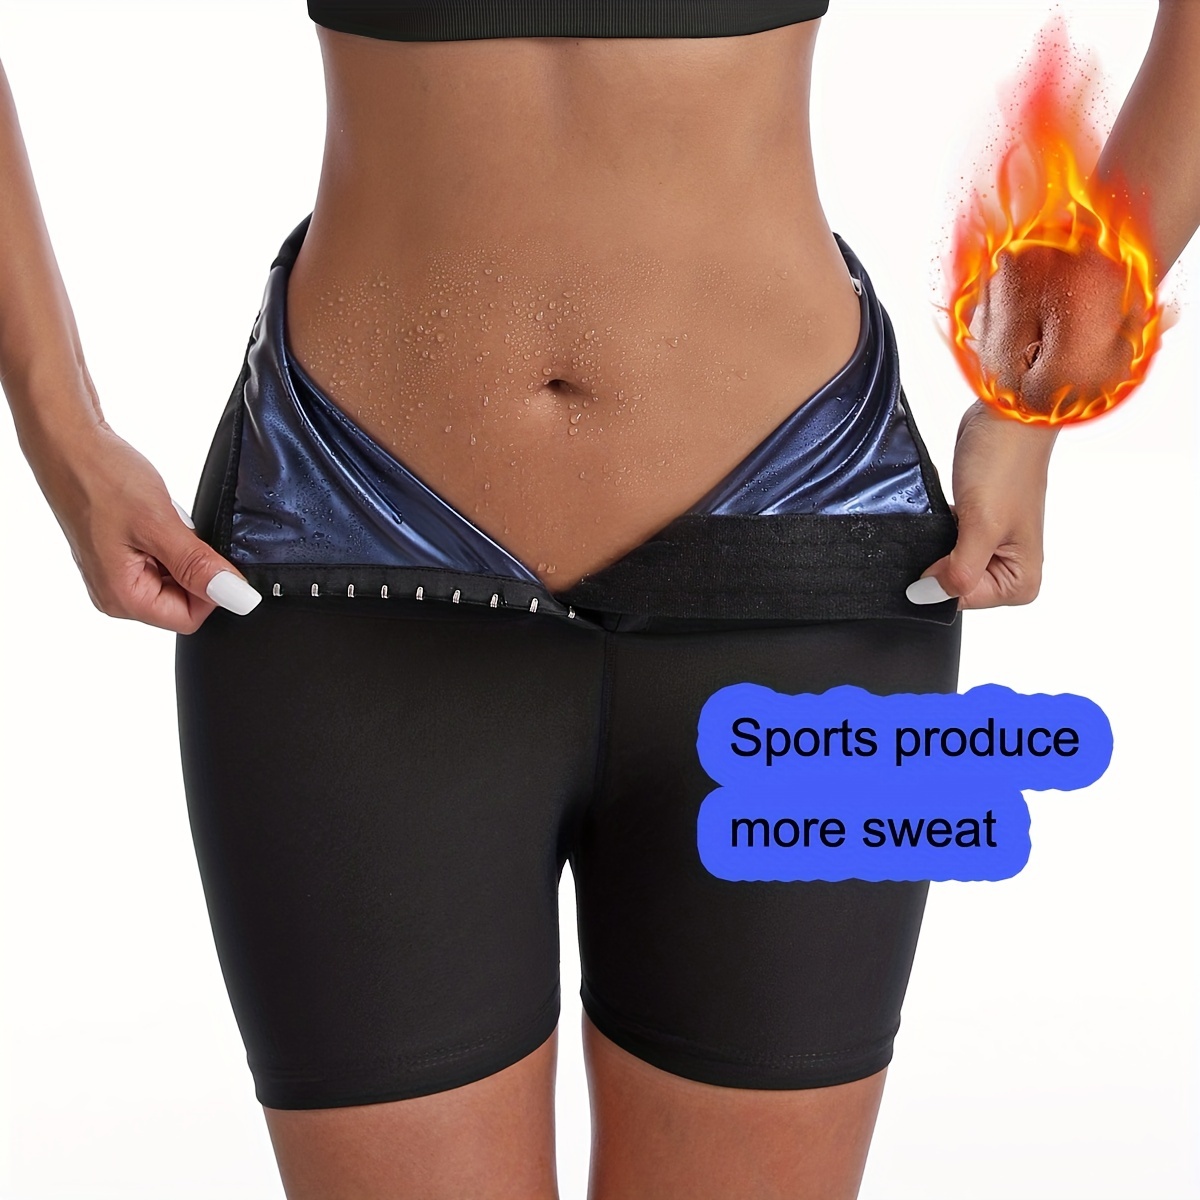 New Body Shaper Pants Women Waist Trainer Sauna Suit Sweat